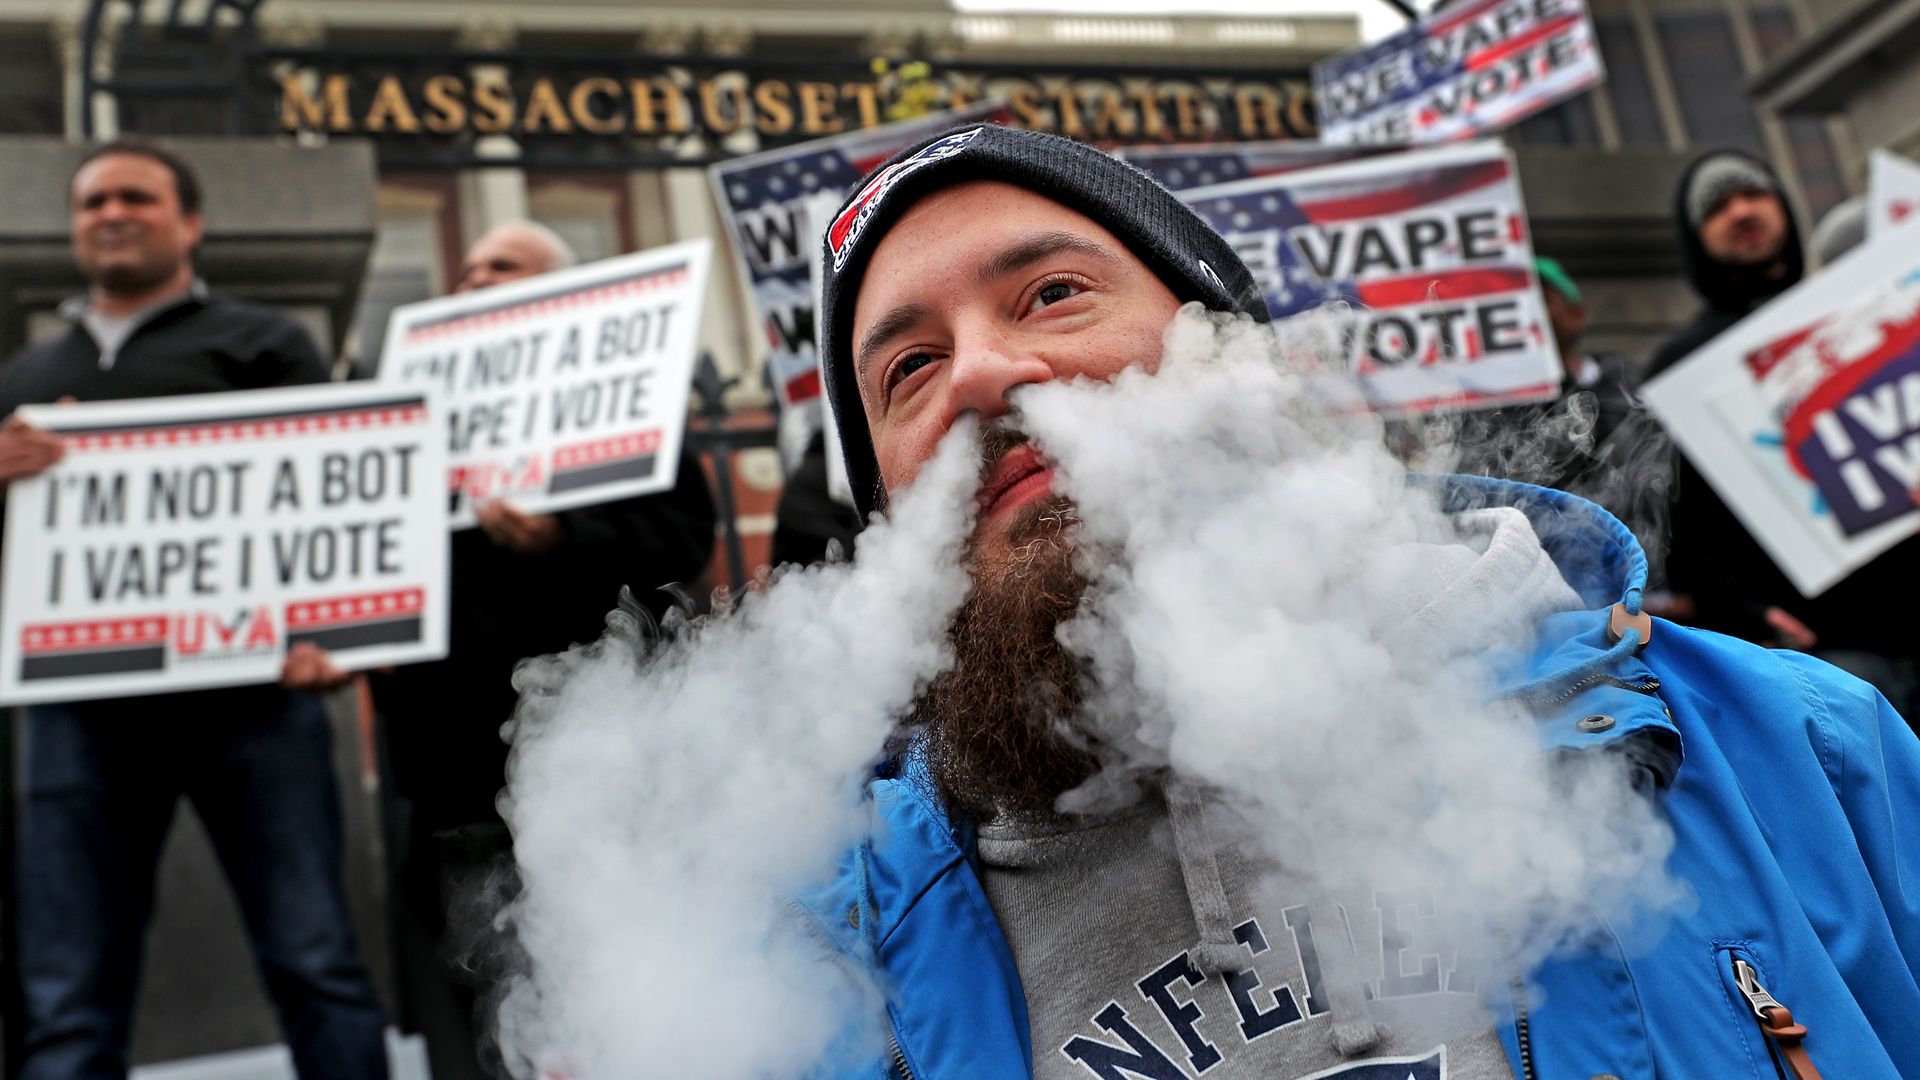 vapes in protest during a demonstration against Massachusetts Governor Charlie Baker's vaping ban on the front steps of the Massachusetts State House 